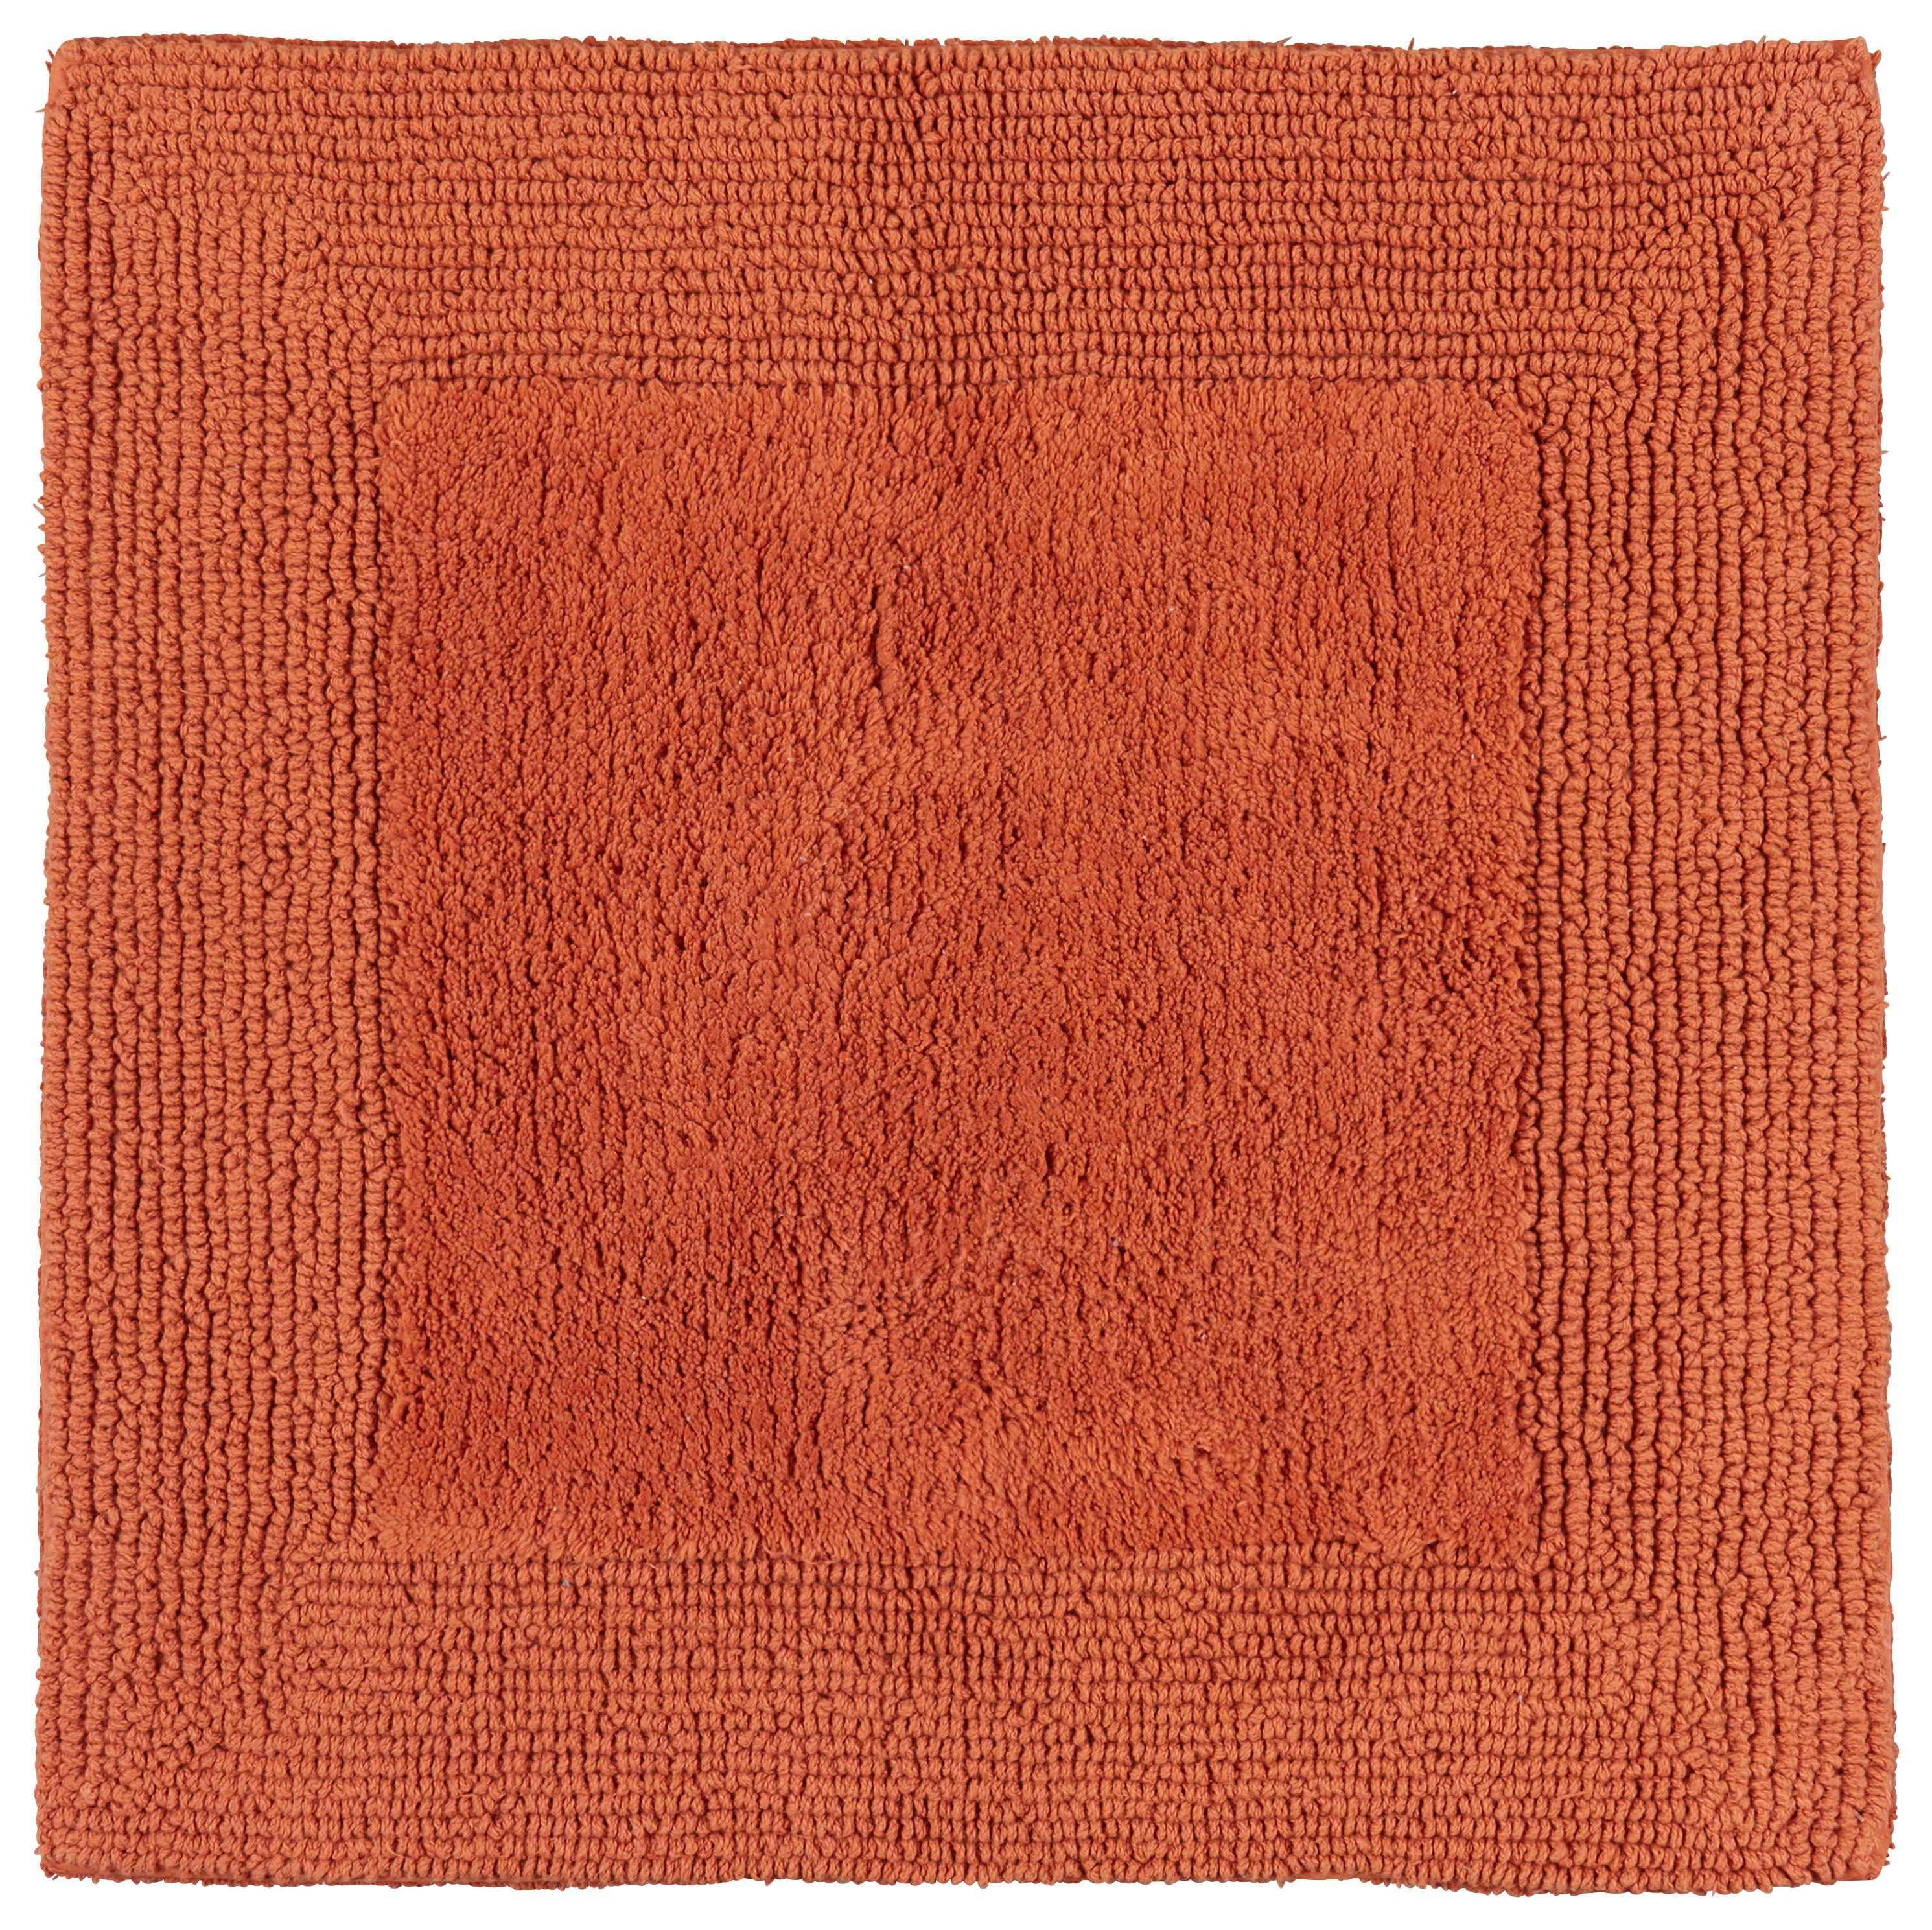 Badematte Karen in Orange ca. 50x50cm - Orange, KONVENTIONELL, Textil (50/50cm) - Premium Living